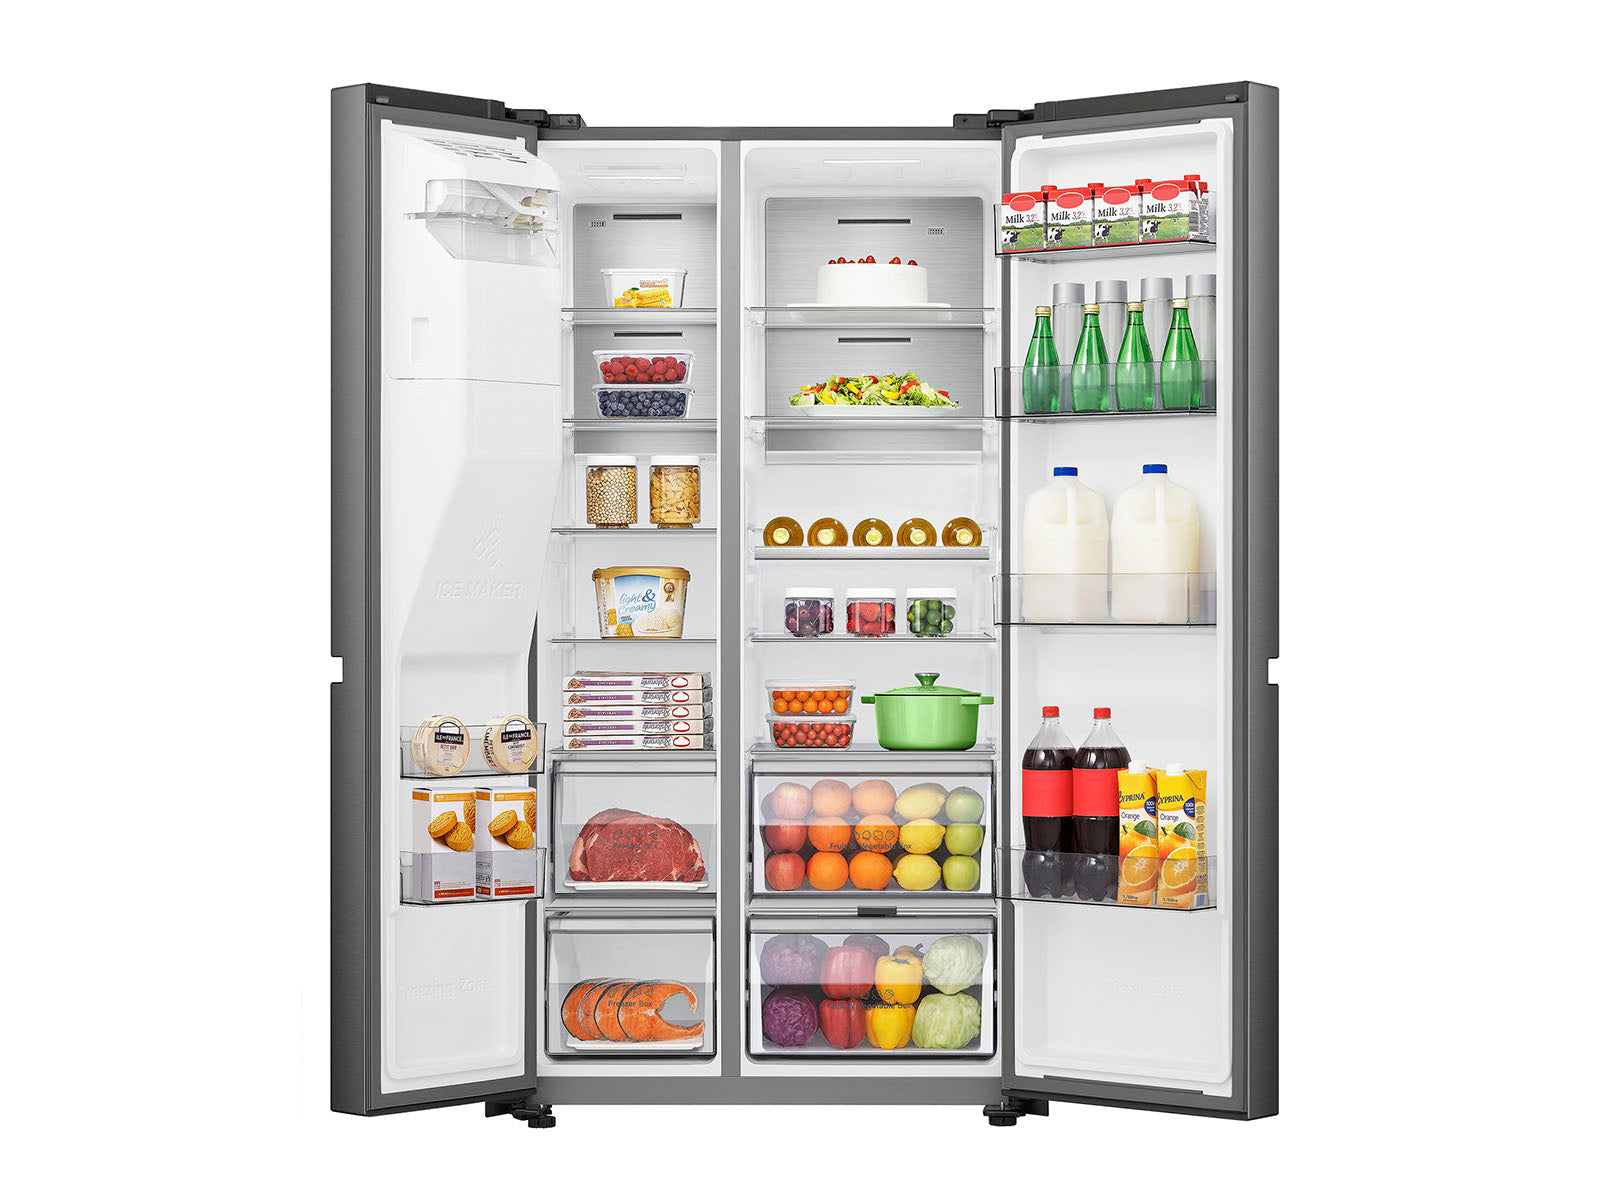 Refrigeradora Side By Side Negro RI-790 Indurama